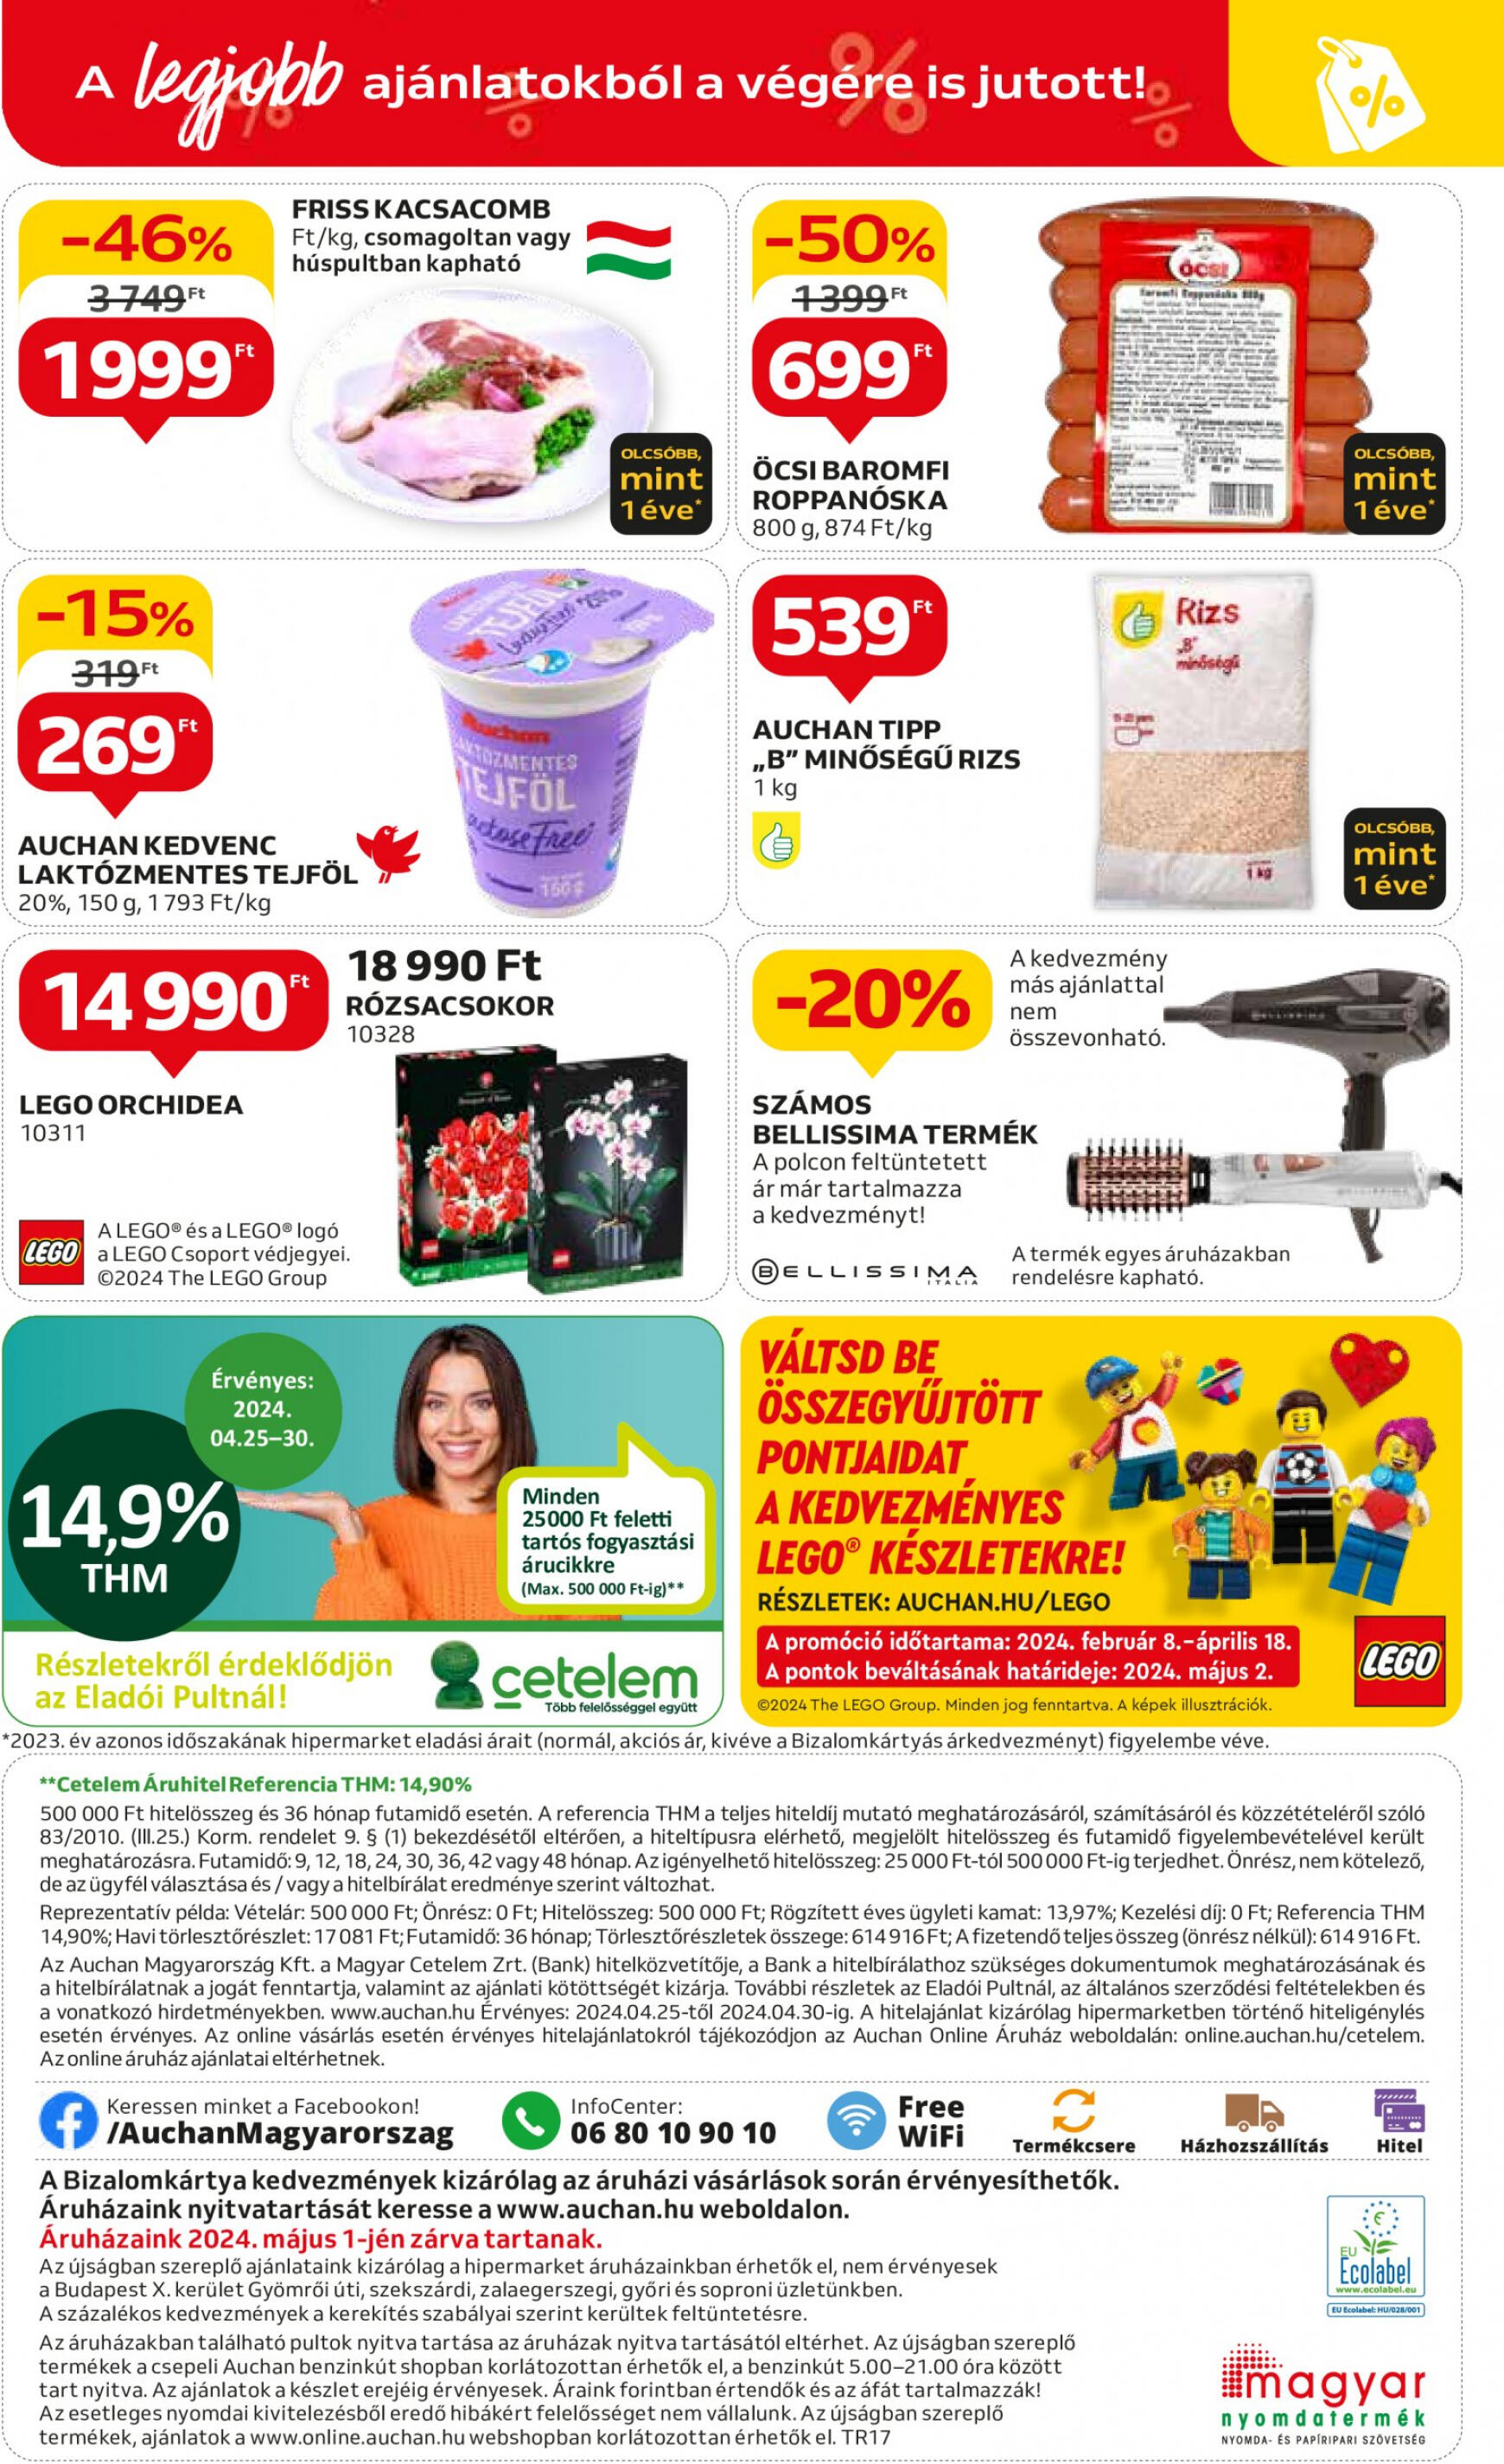 auchan - Aktuális újság Auchan 04.25. - 04.30. - page: 48